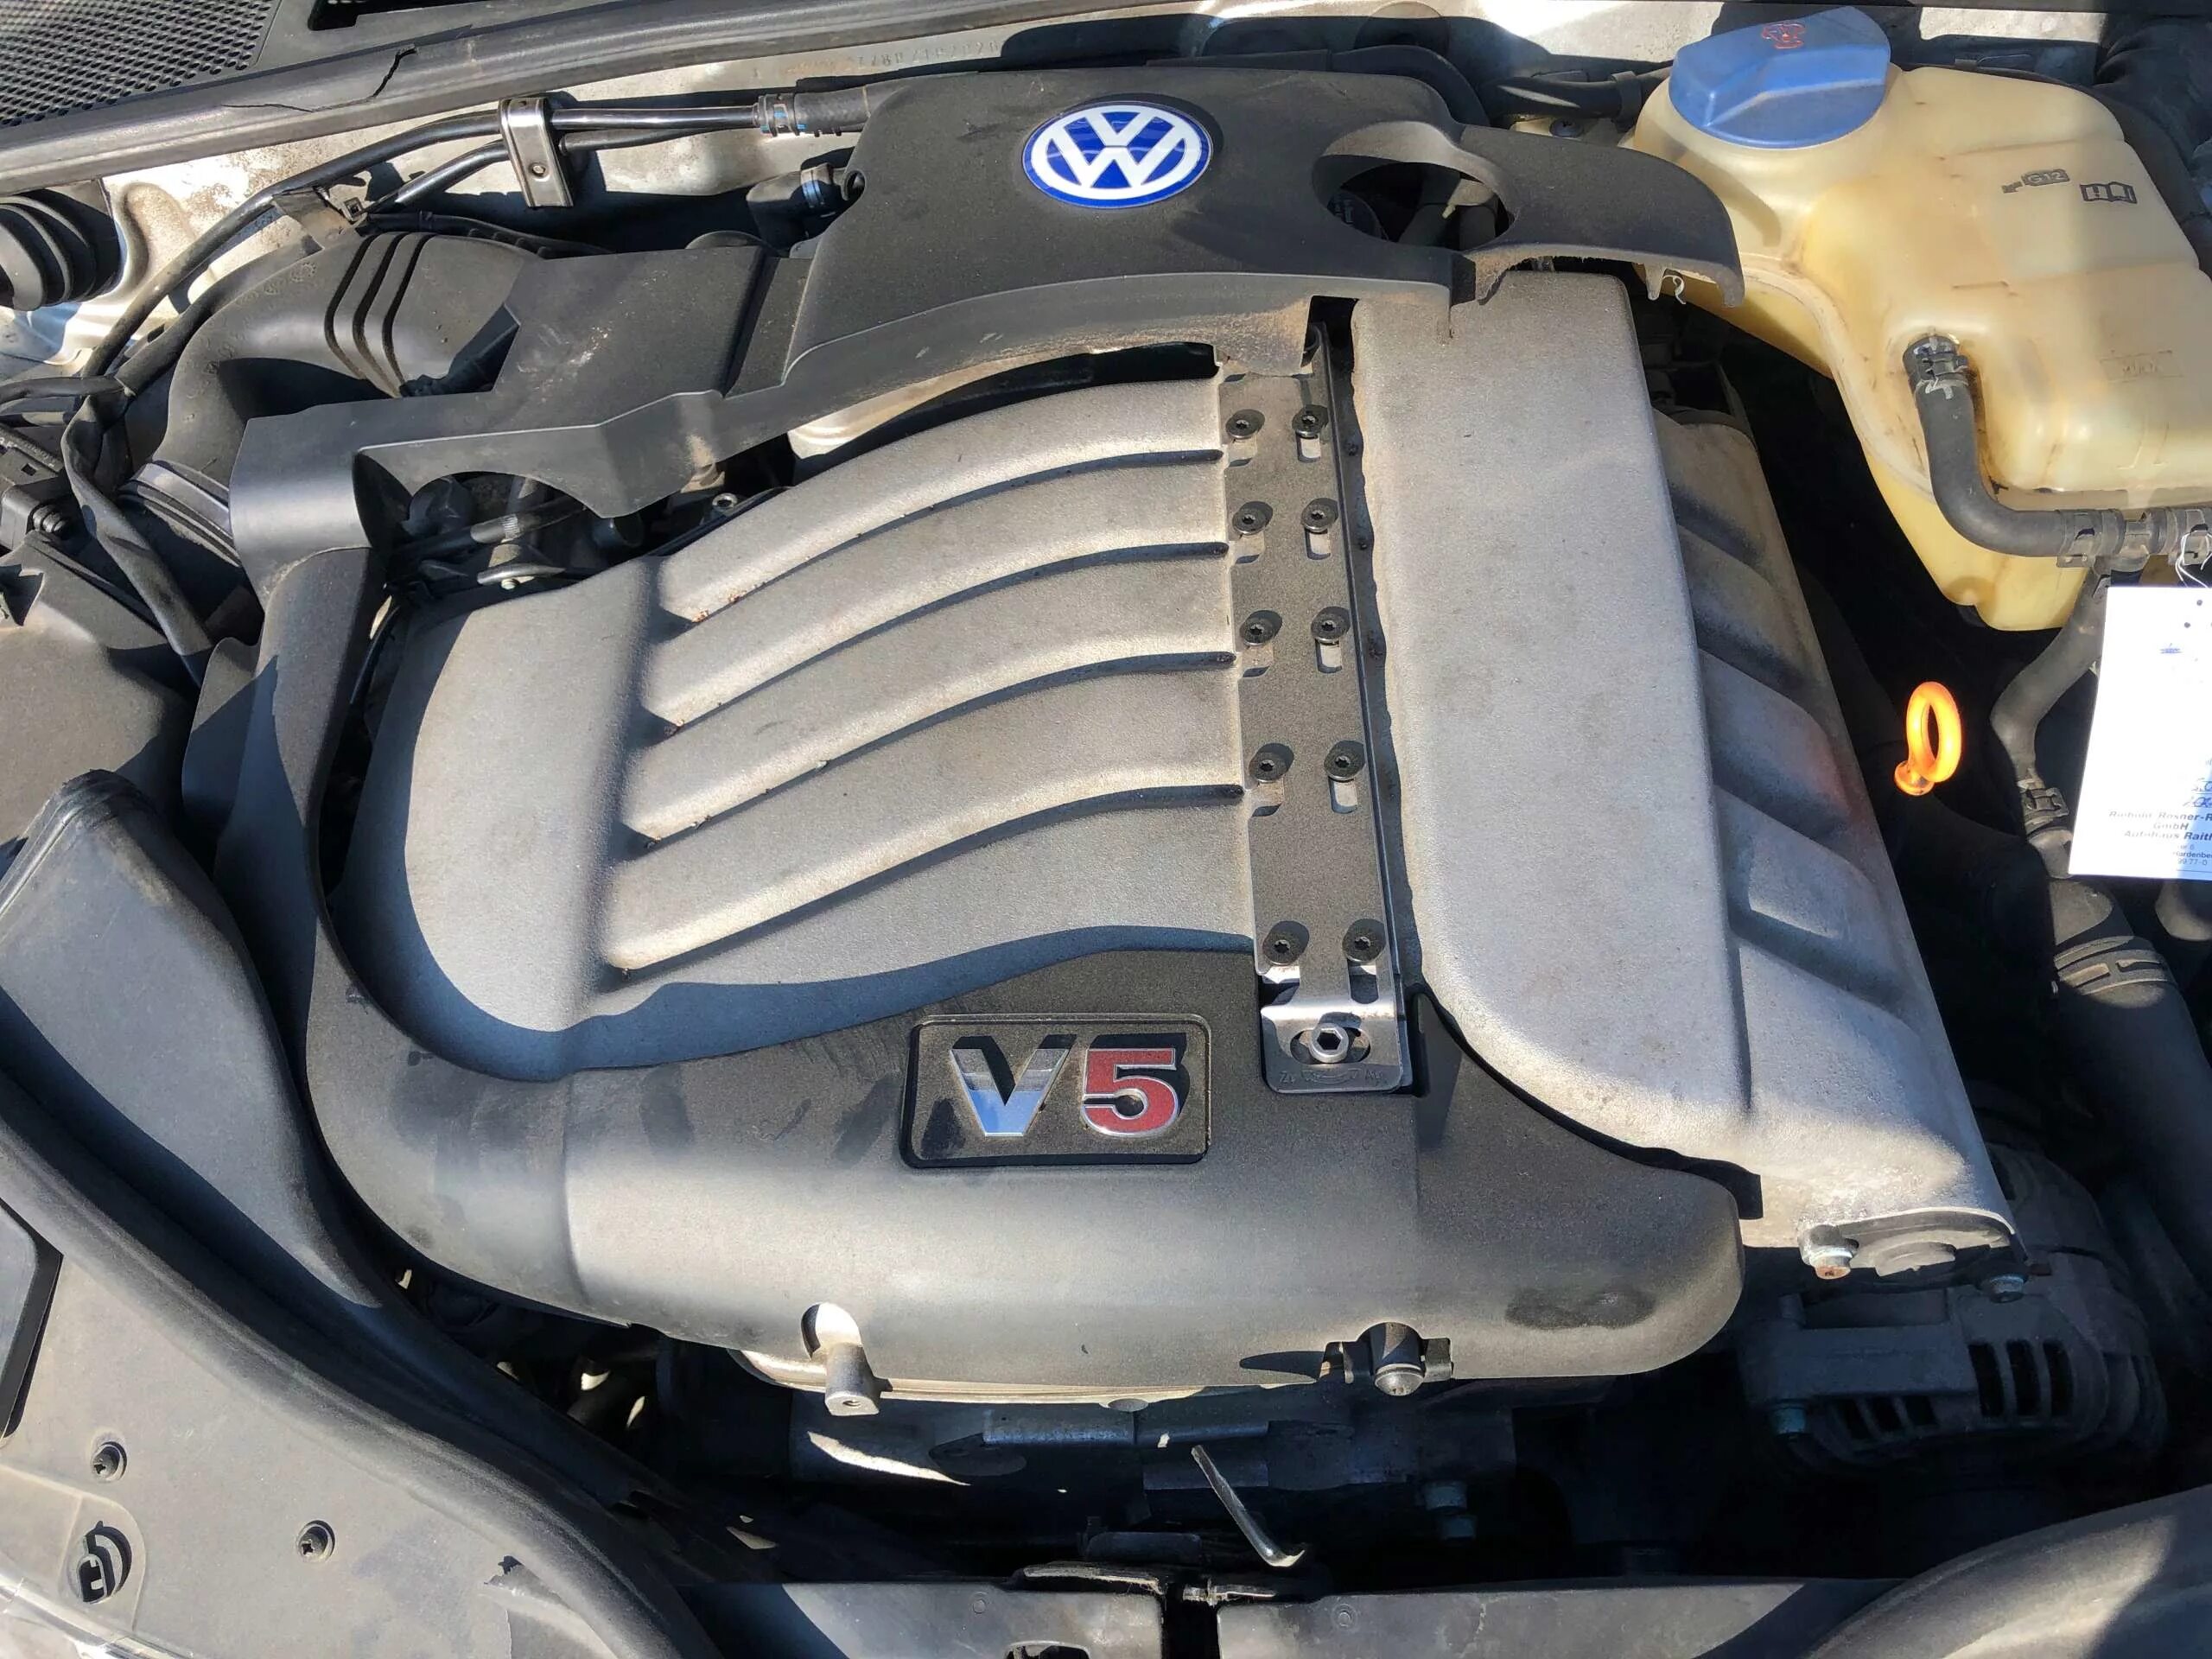 B 5 v5. Volkswagen Passat v5 мотор. VW Passat b5 мотор. Двигатель VW Passat b5 2.3. Volkswagen 2.3 v5 мотор.